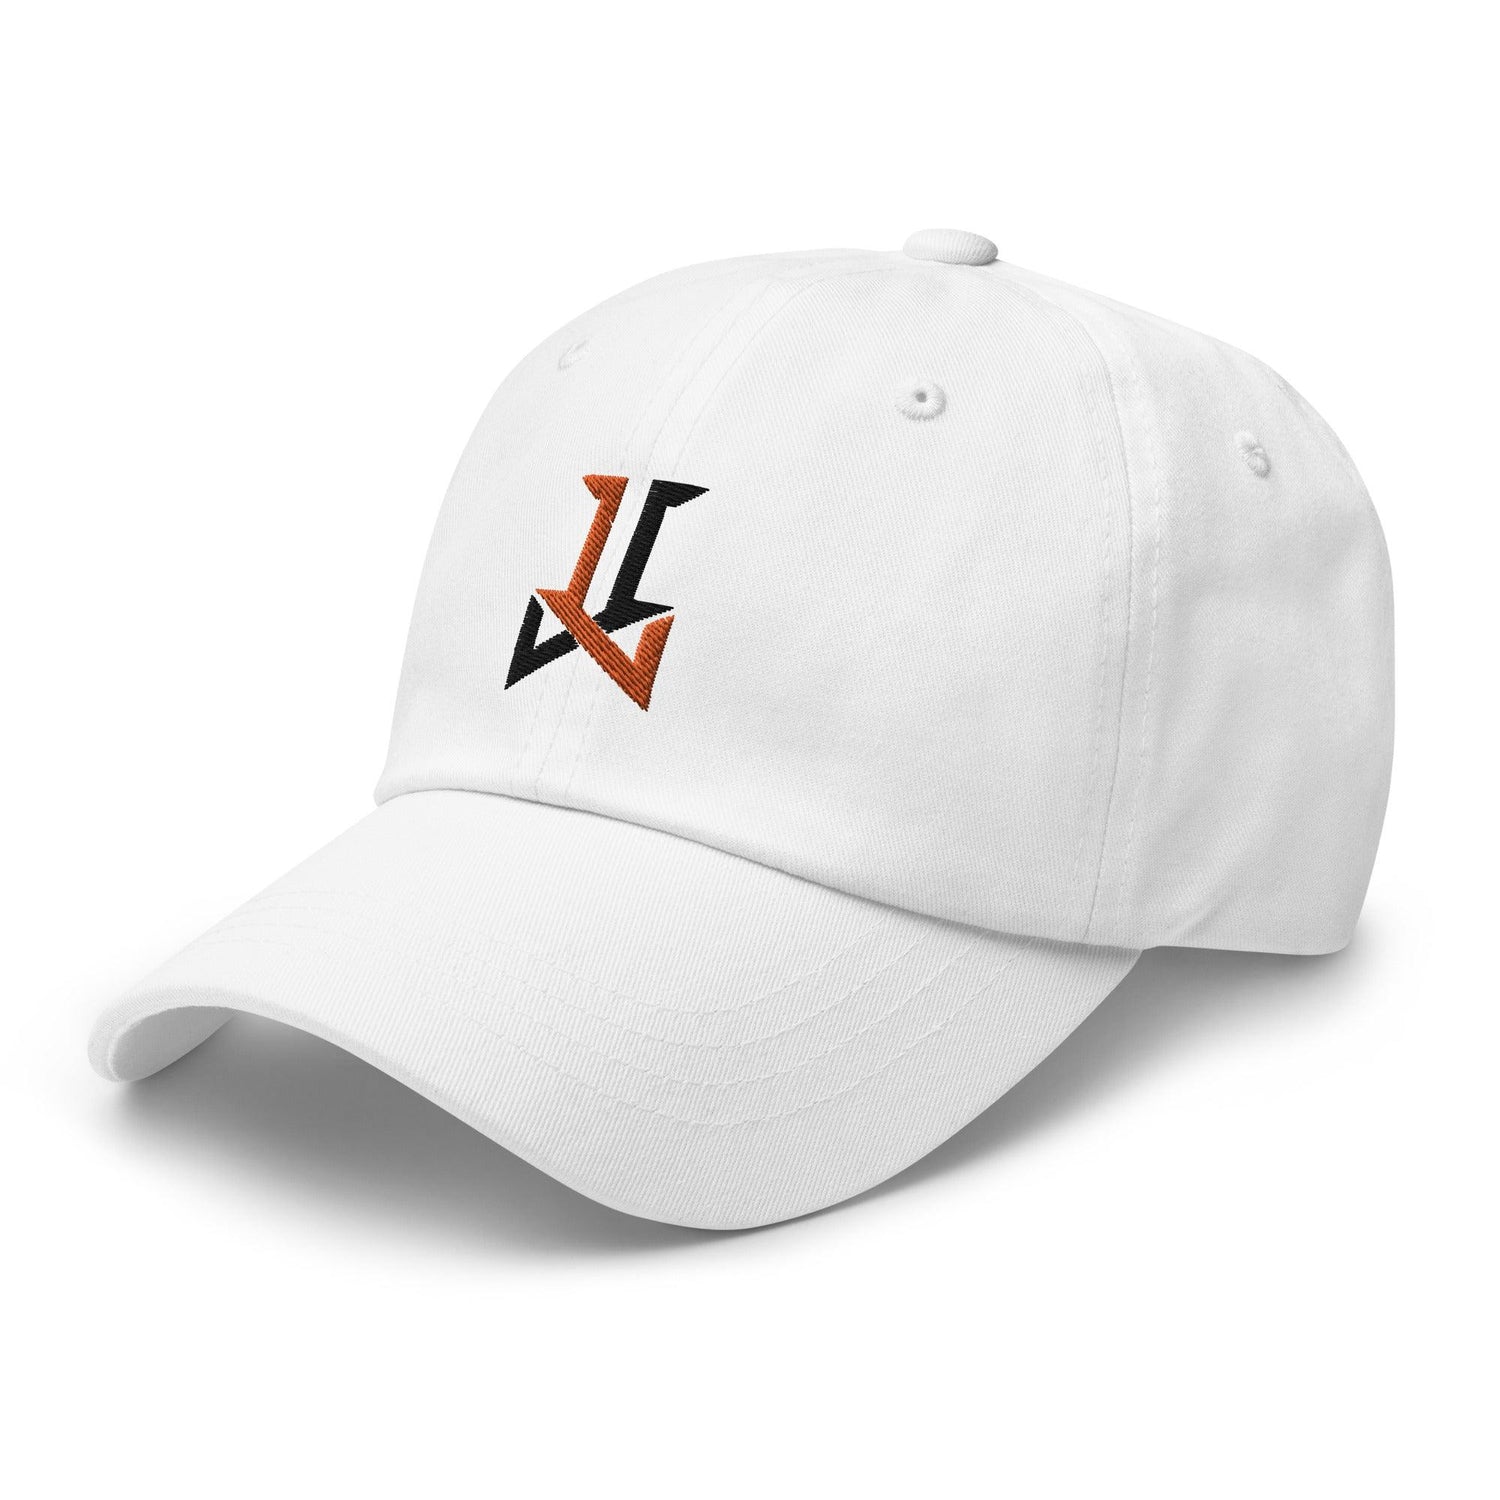 Logan Jordan "Essential" hat - Fan Arch